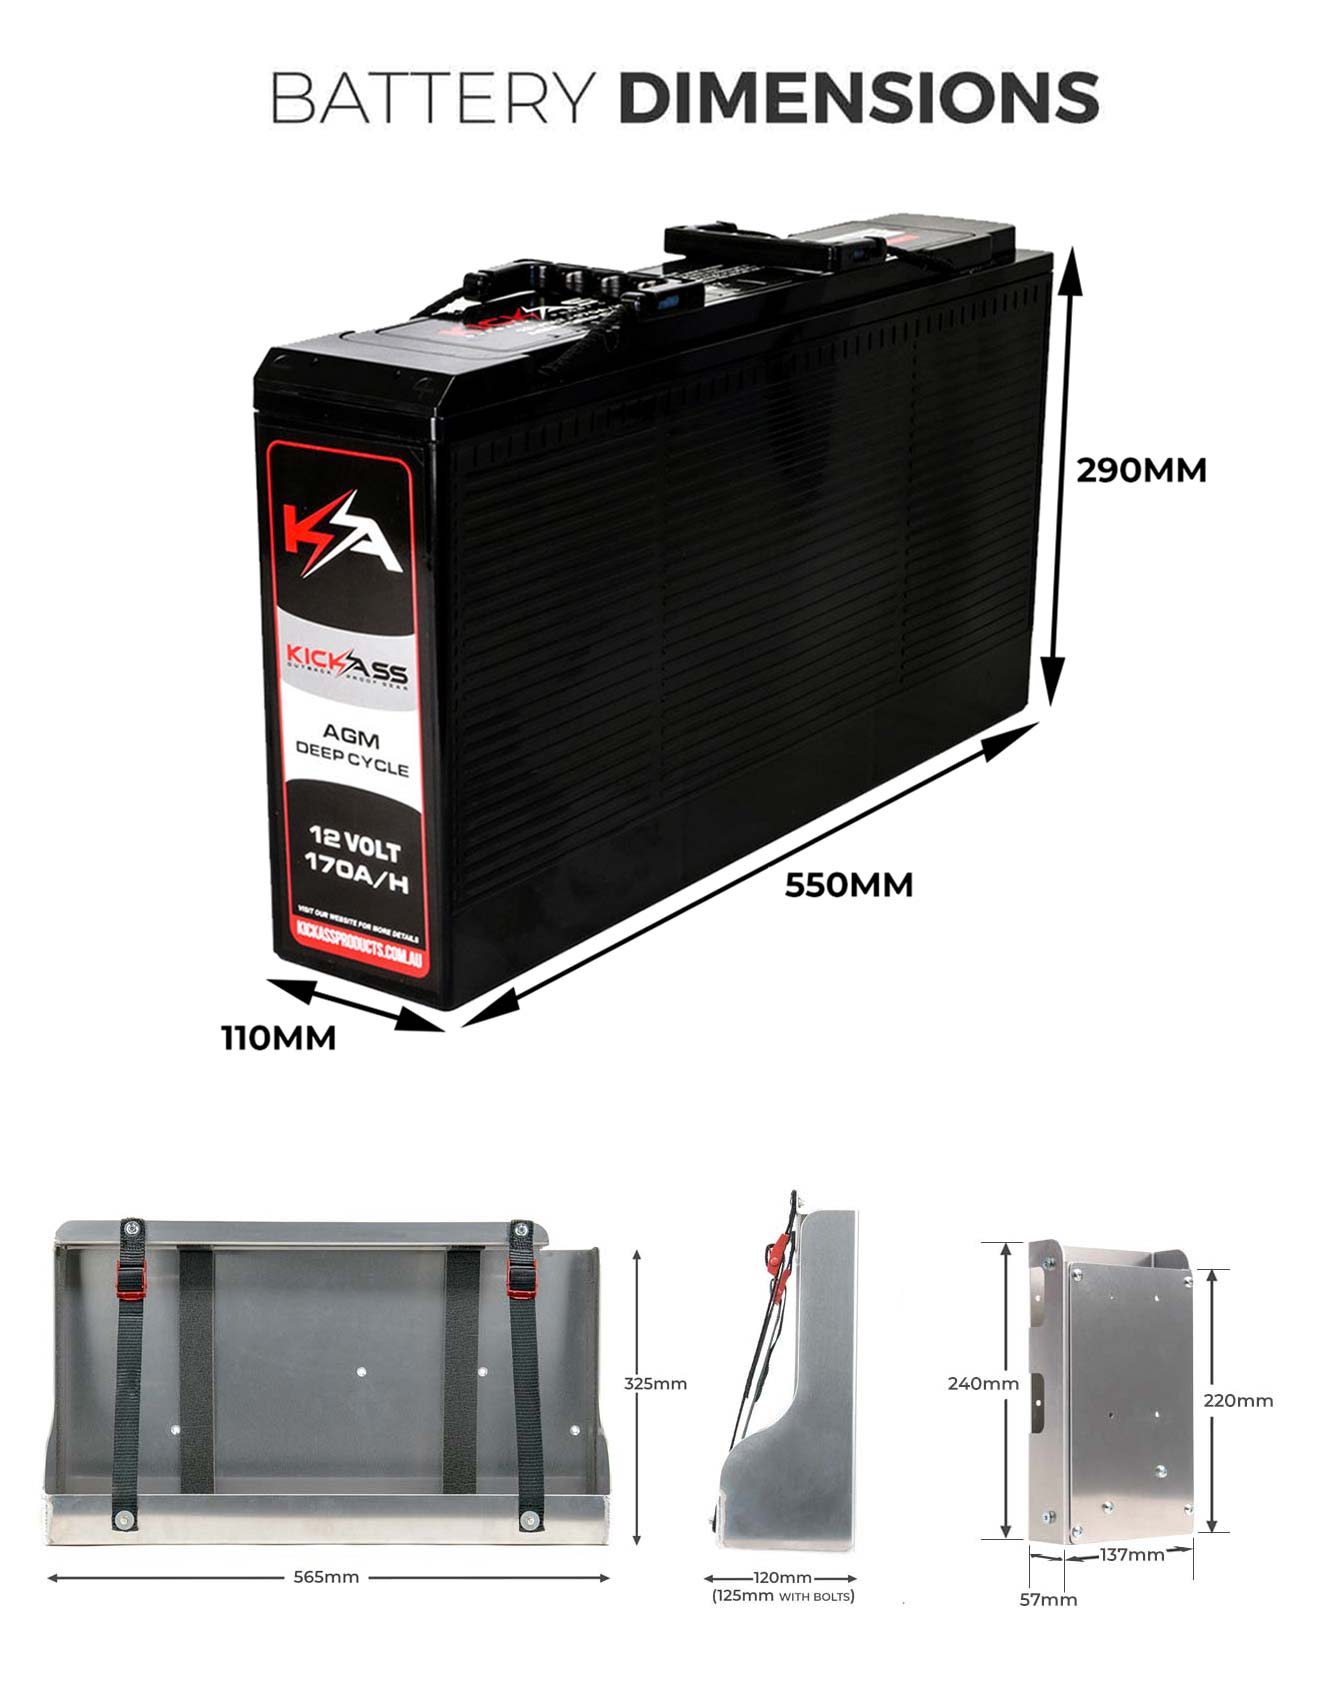 KICKASS 12V 170AH AGM Battery with 170AH Slim Battery Tray, Accessory Panel & Wiring Kit